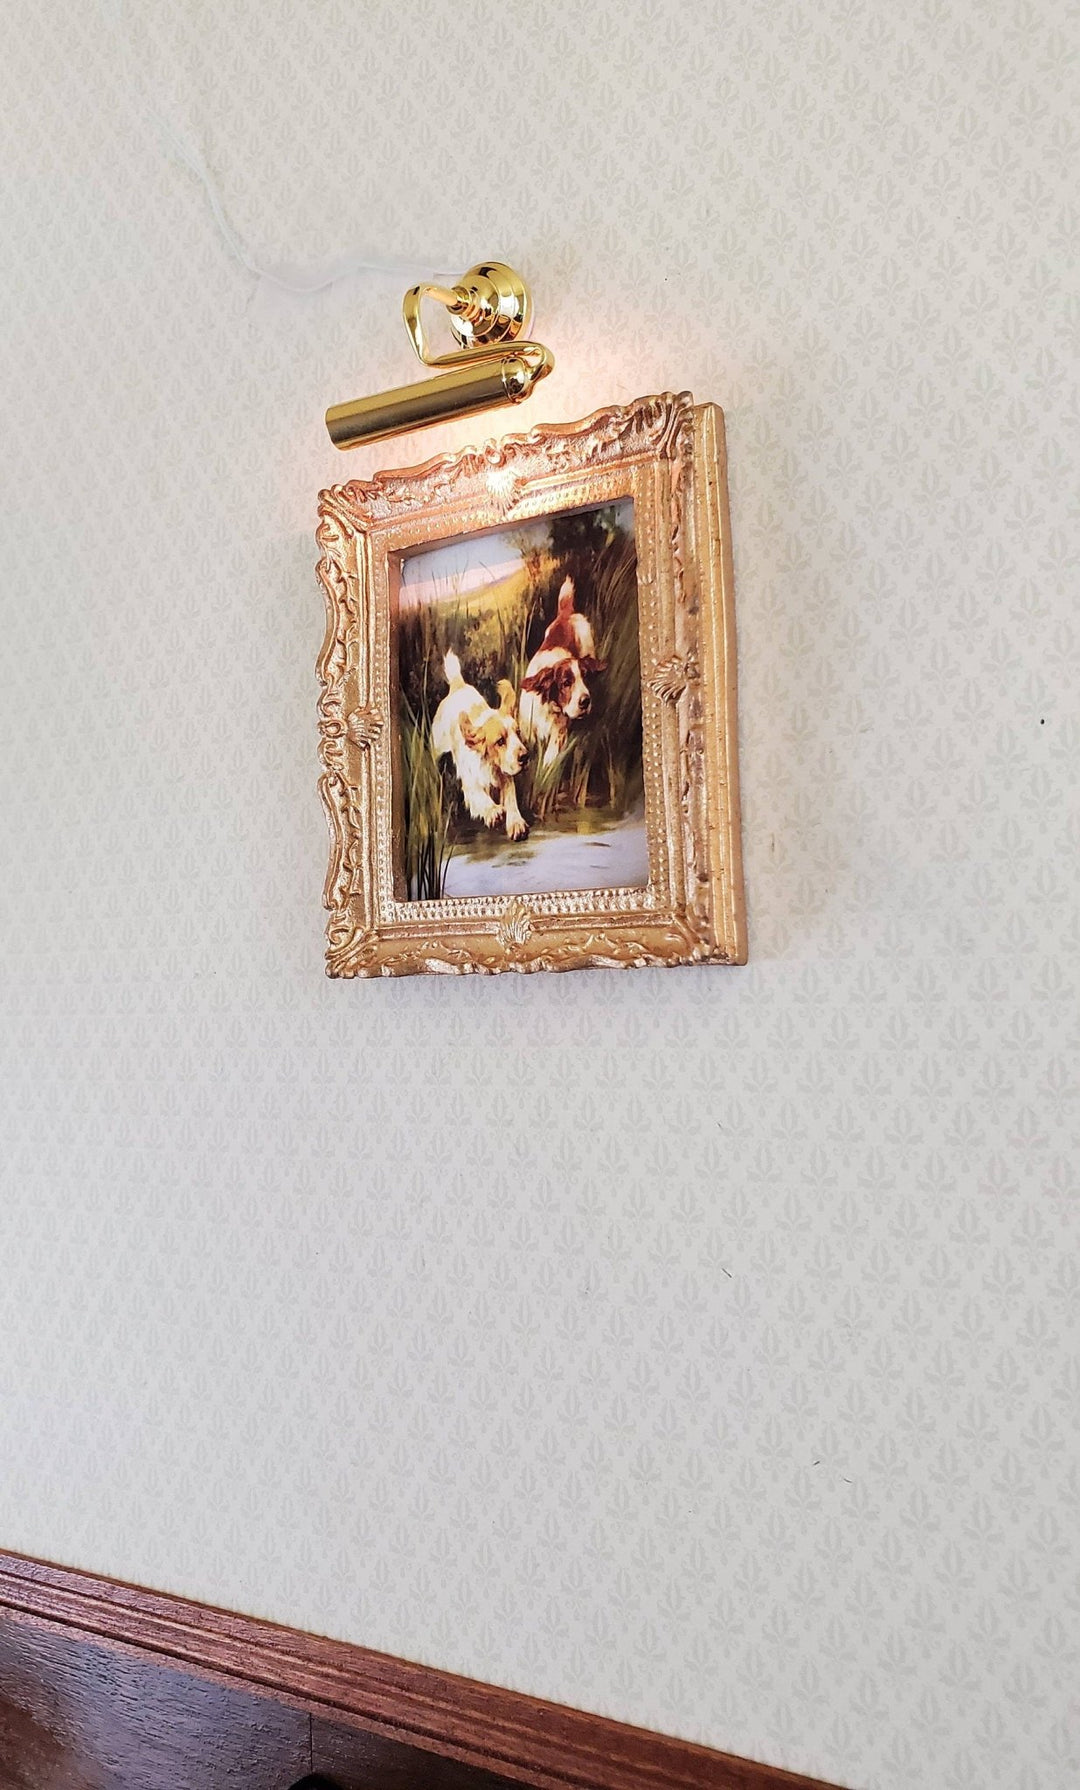 Dollhouse Picture Light Gold 12 Volt with Plug 1:12 Scale Miniature Lamp - Miniature Crush